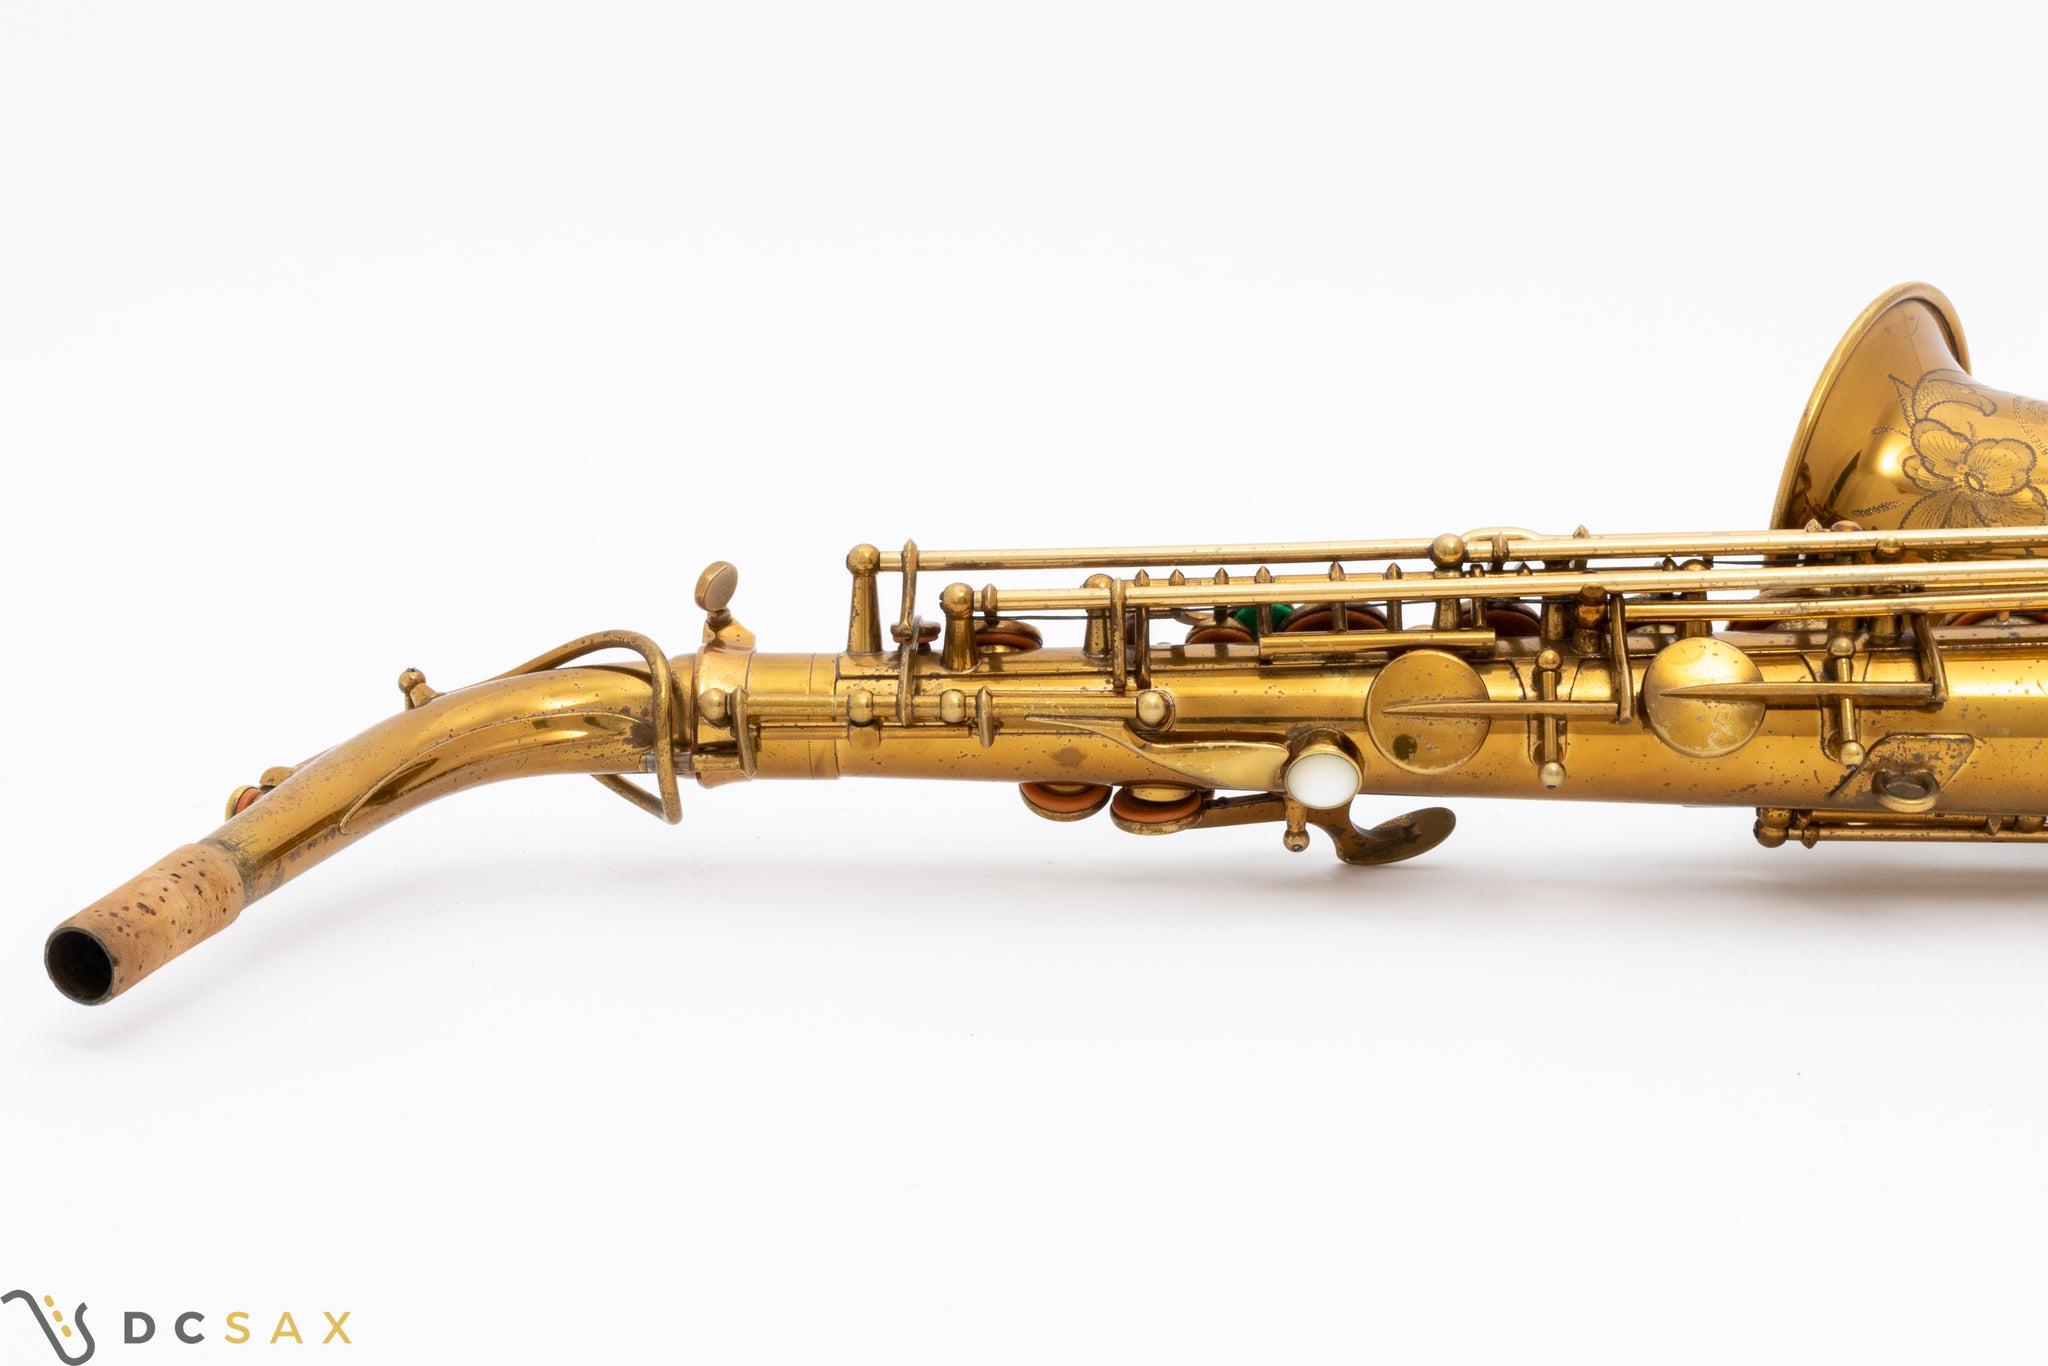 1939 Selmer Jimmy Dorsey Alto Saxophone, 98% ORIGINAL LACQUER, Video